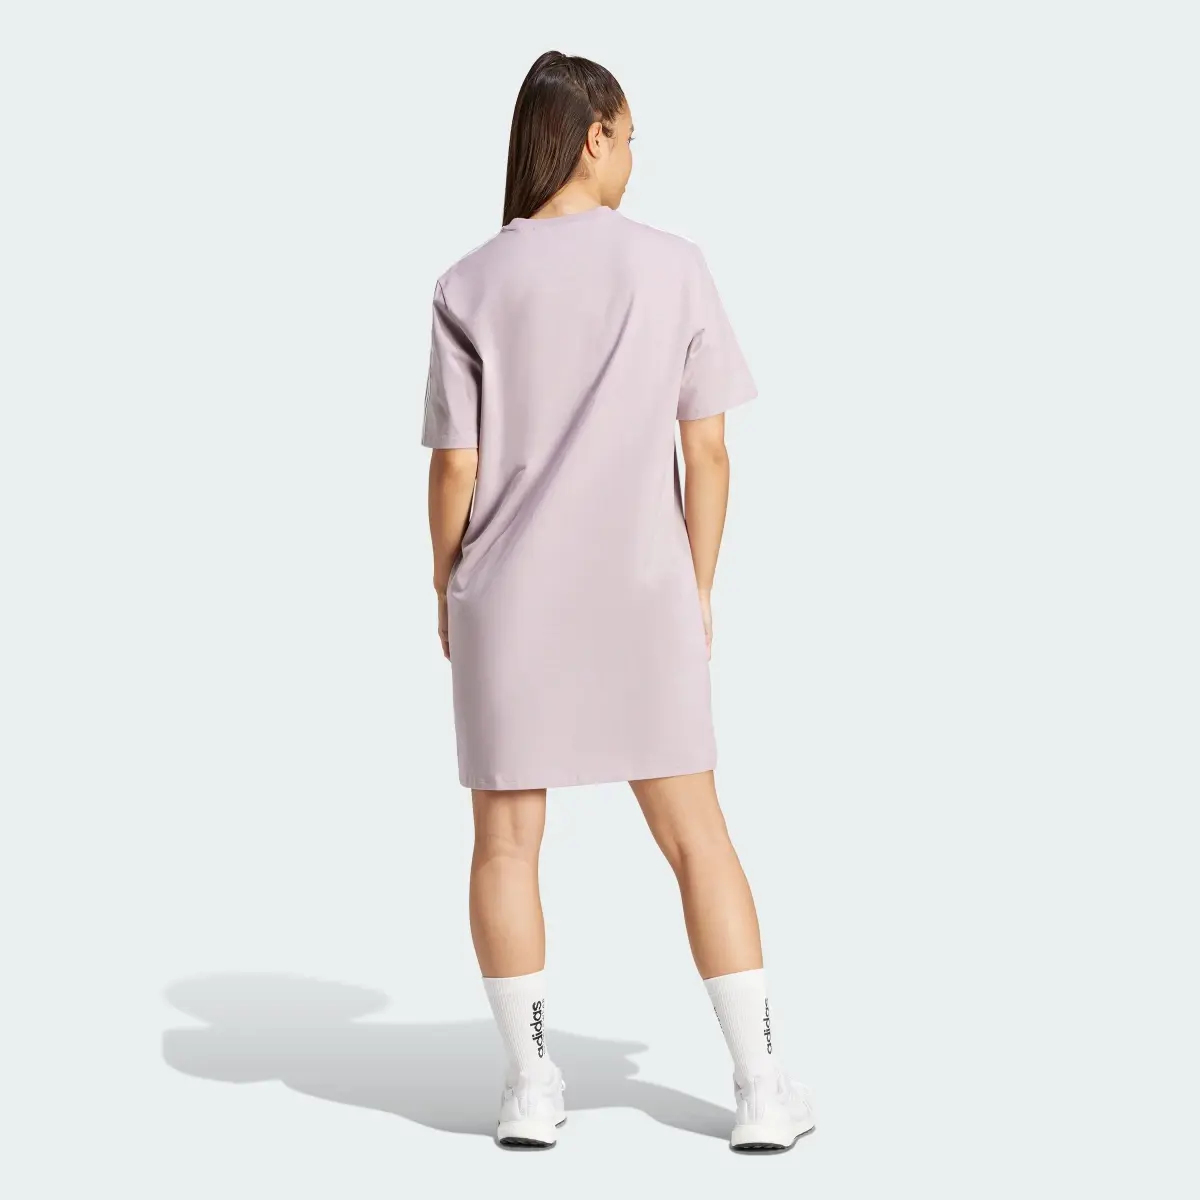 Adidas Essentials 3-Stripes Single Jersey Boyfriend Tee Dress. 3